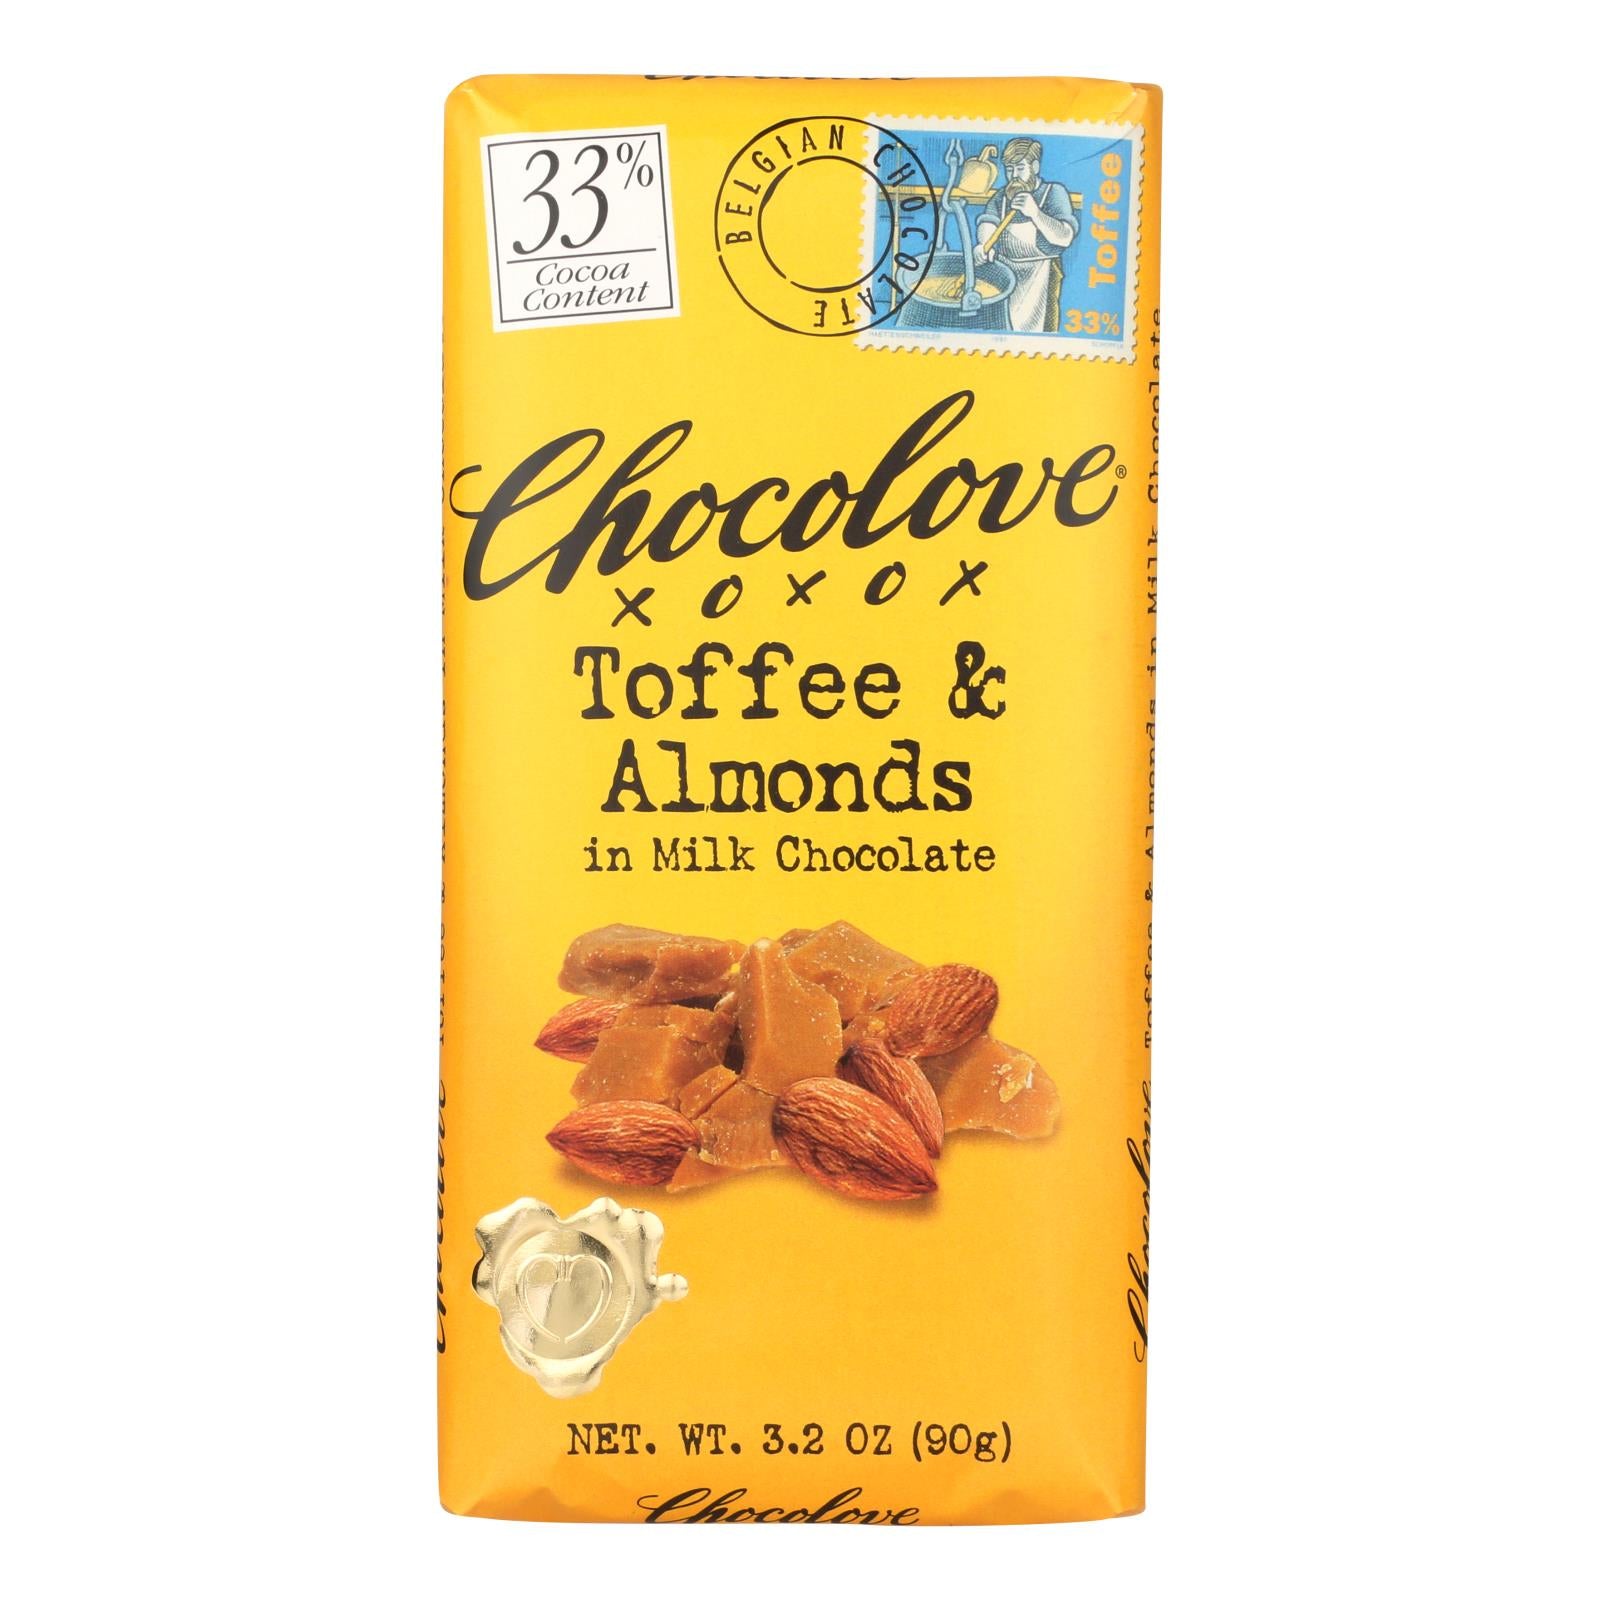 Chocolove Xoxox - Premium Chocolate Bar - Milk Chocolate - Toffee and Almonds - 3.2 oz Bars - Case of 12